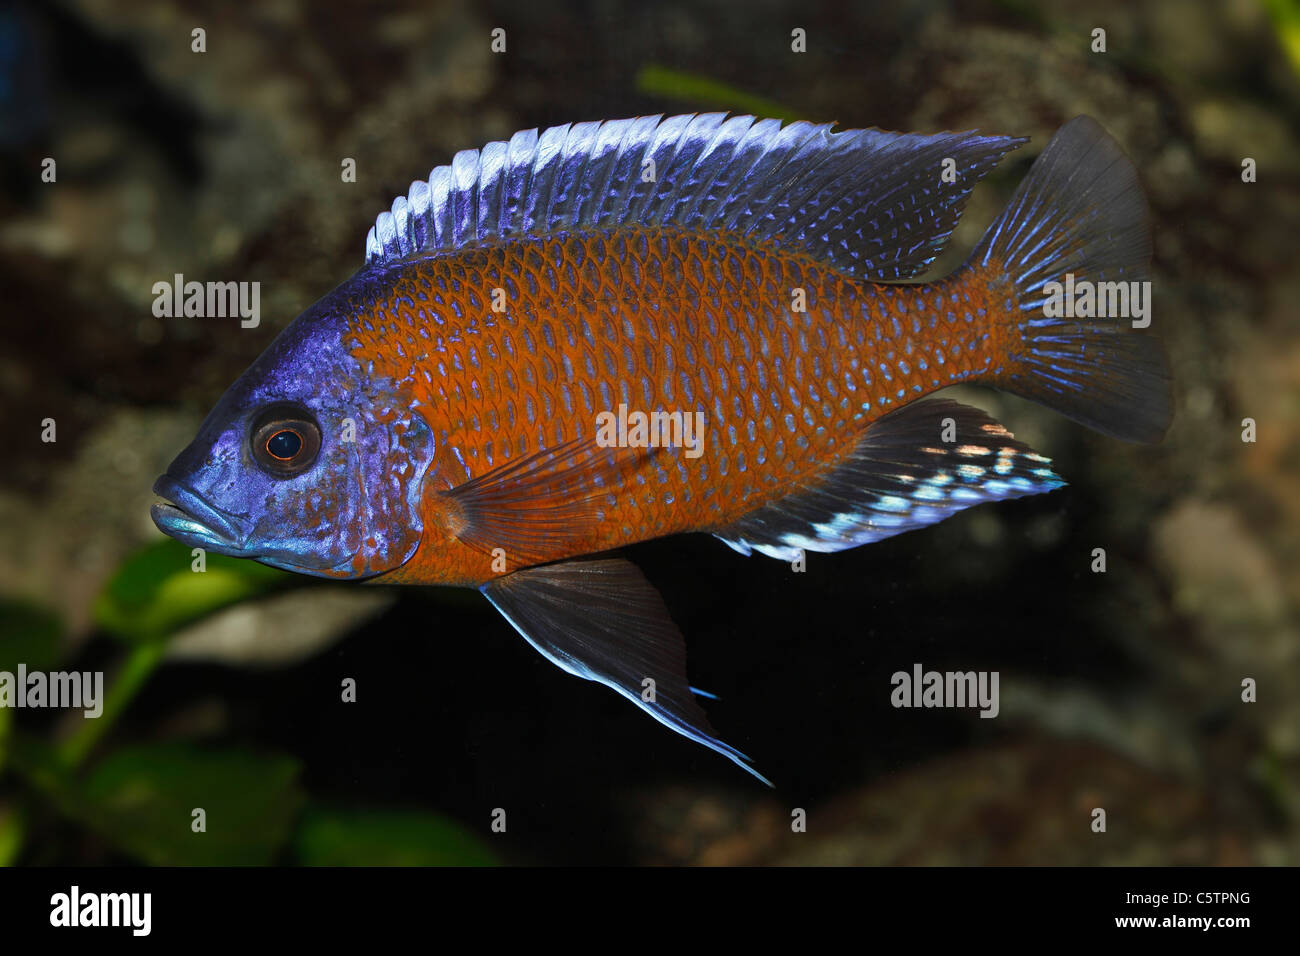 Germany, Cichlid fish swimming in aquarium freshwater Stock Photo